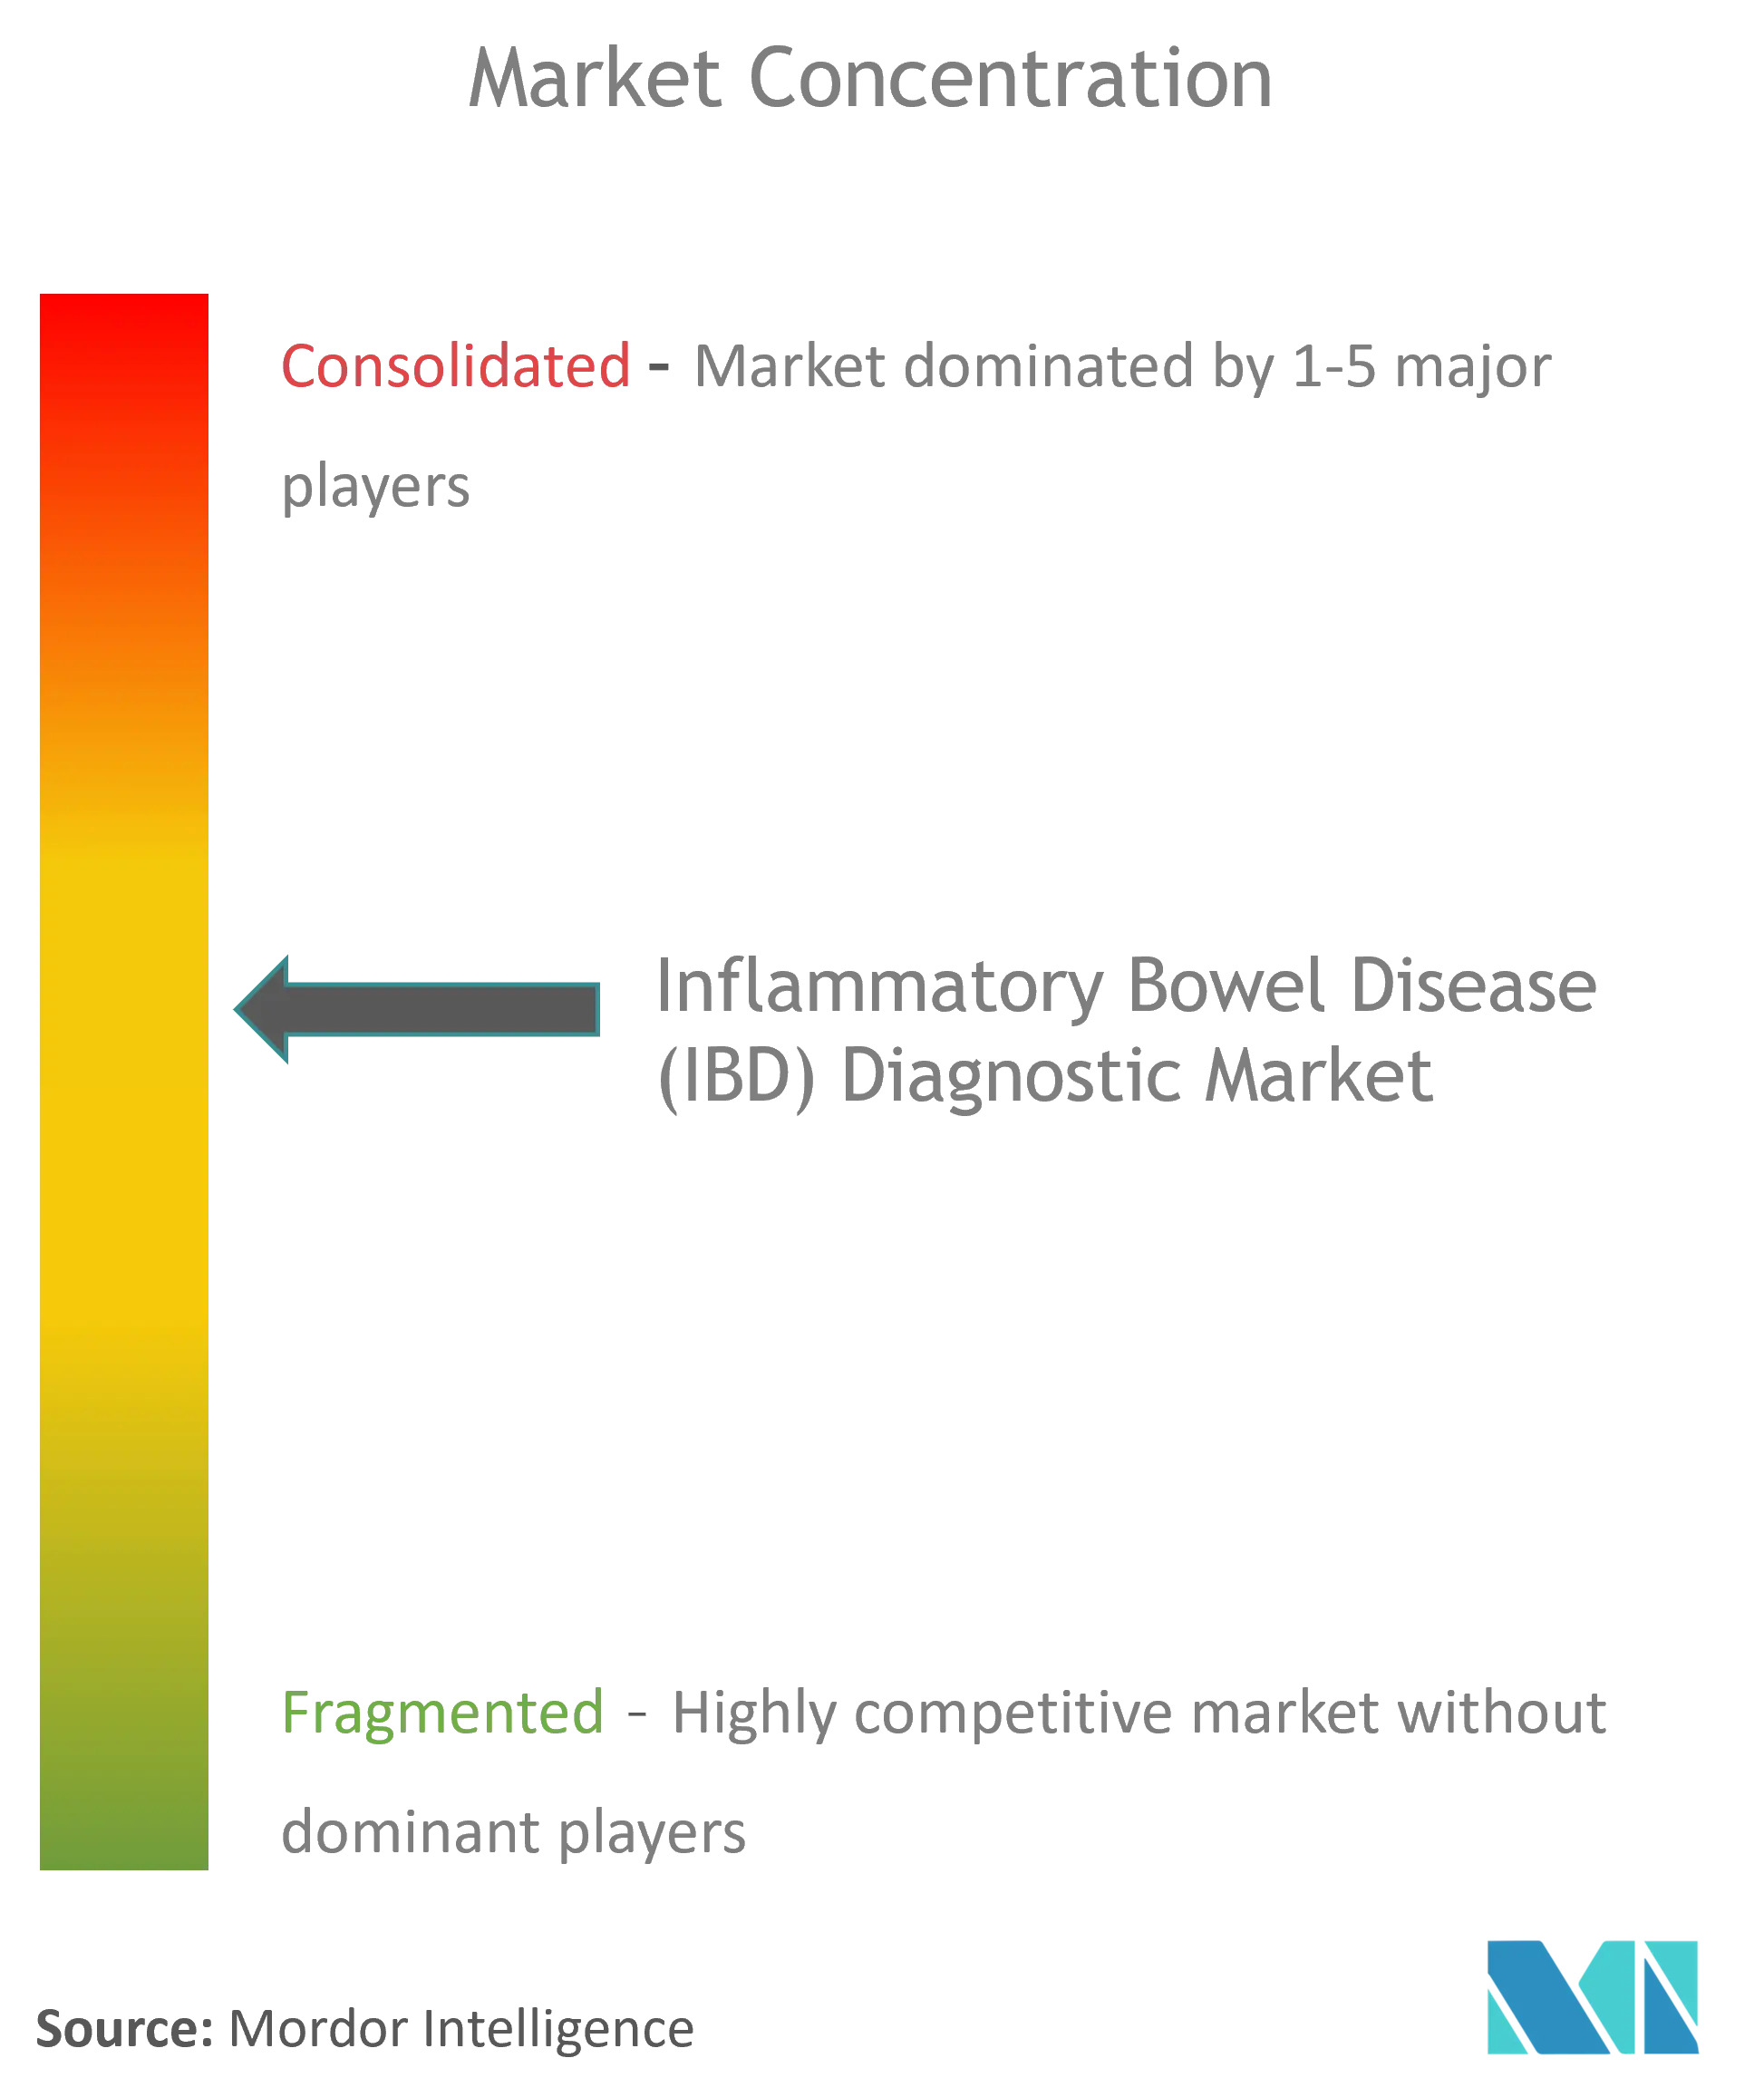 Global Inflammatory Bowel Disease (IBD) Diagnostic Market Concentration